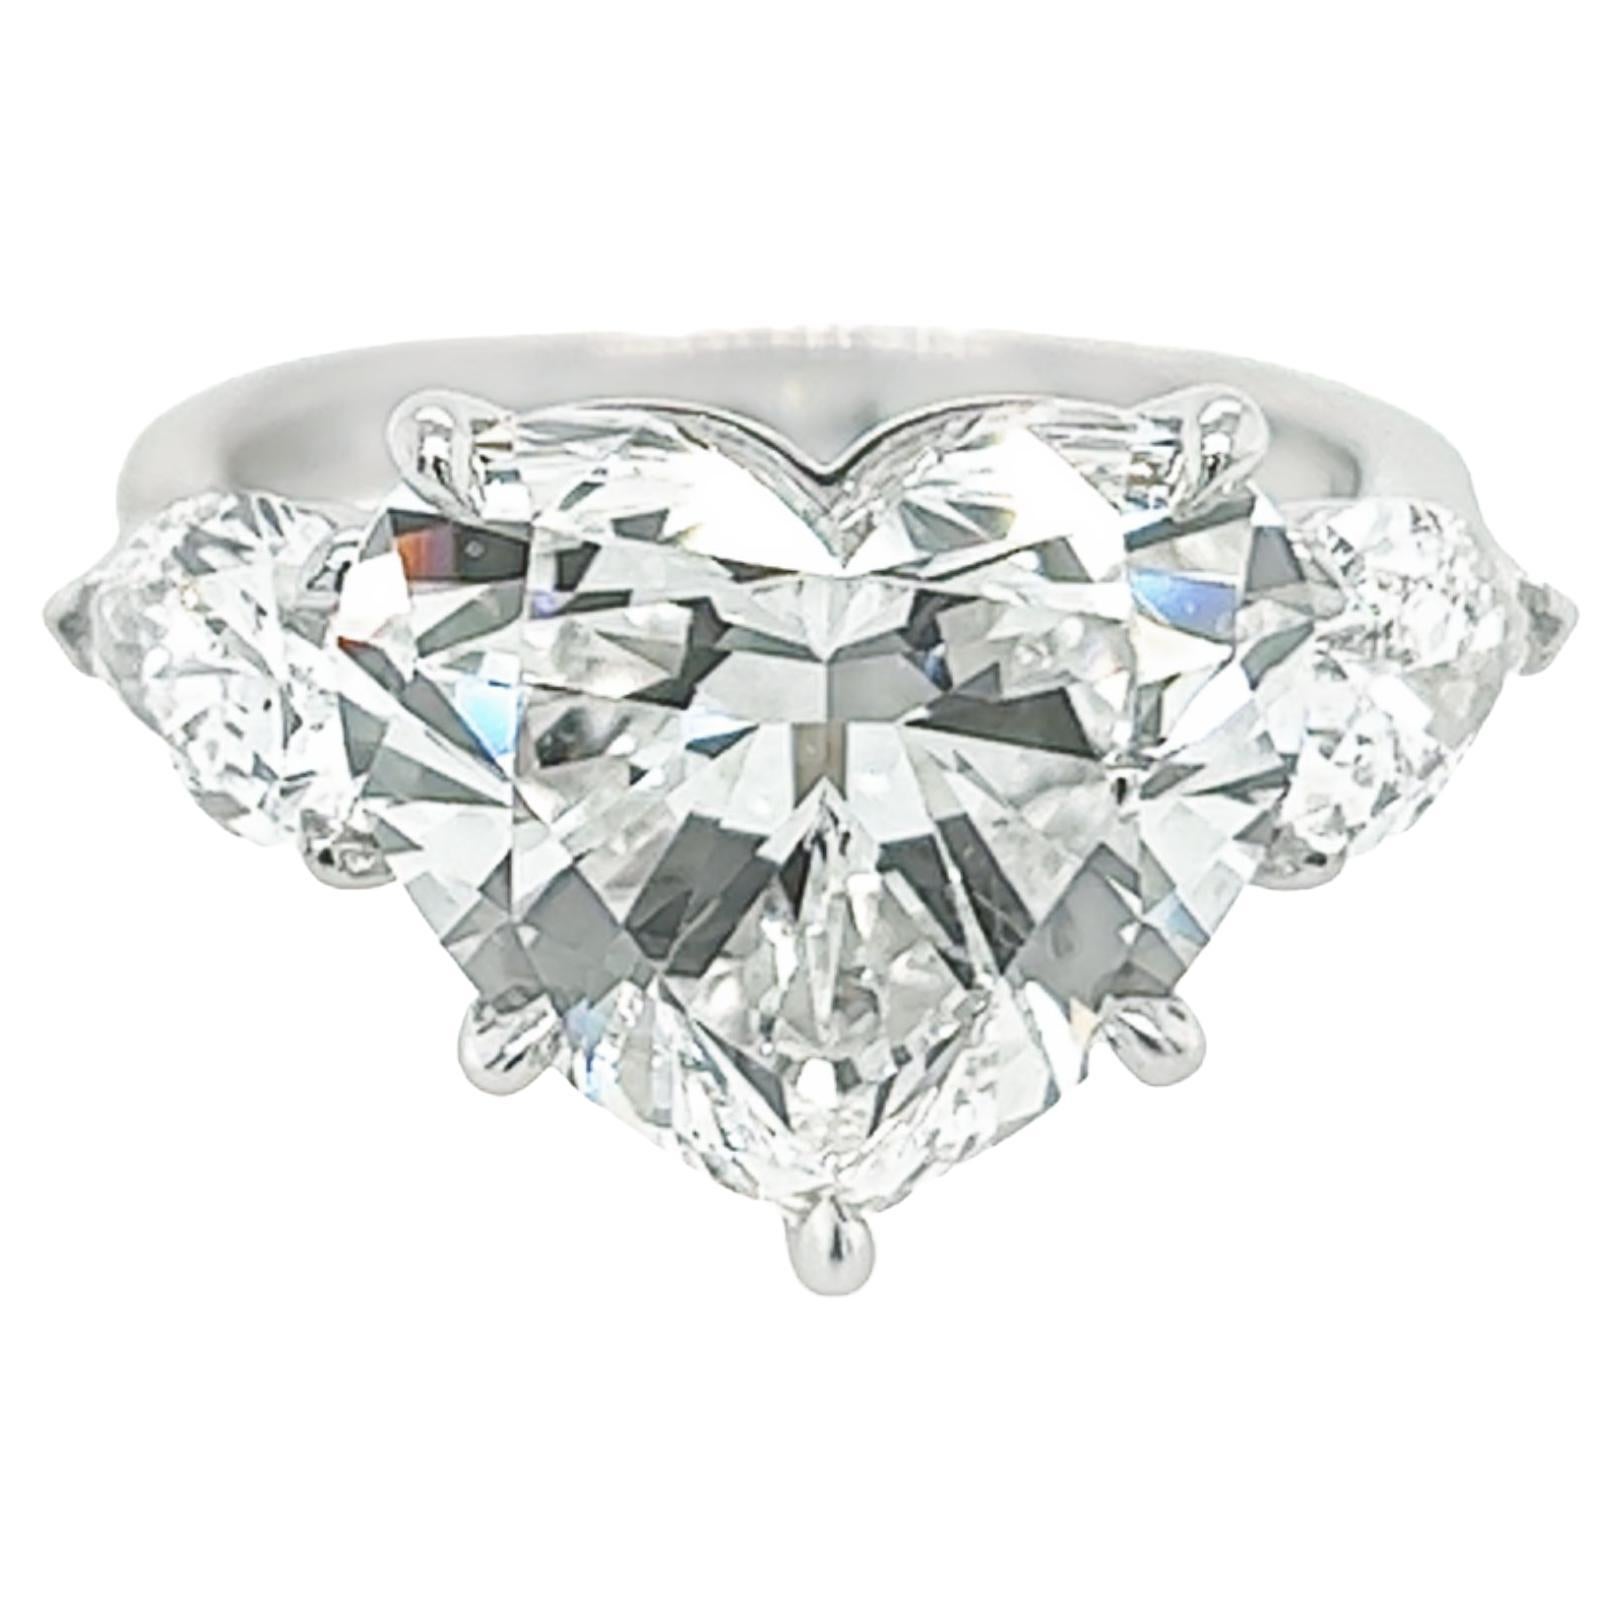 David Rosenberg 7.09 Carat Heart Shape F VS2 GIA 3 Stone Diamond Engagement Ring